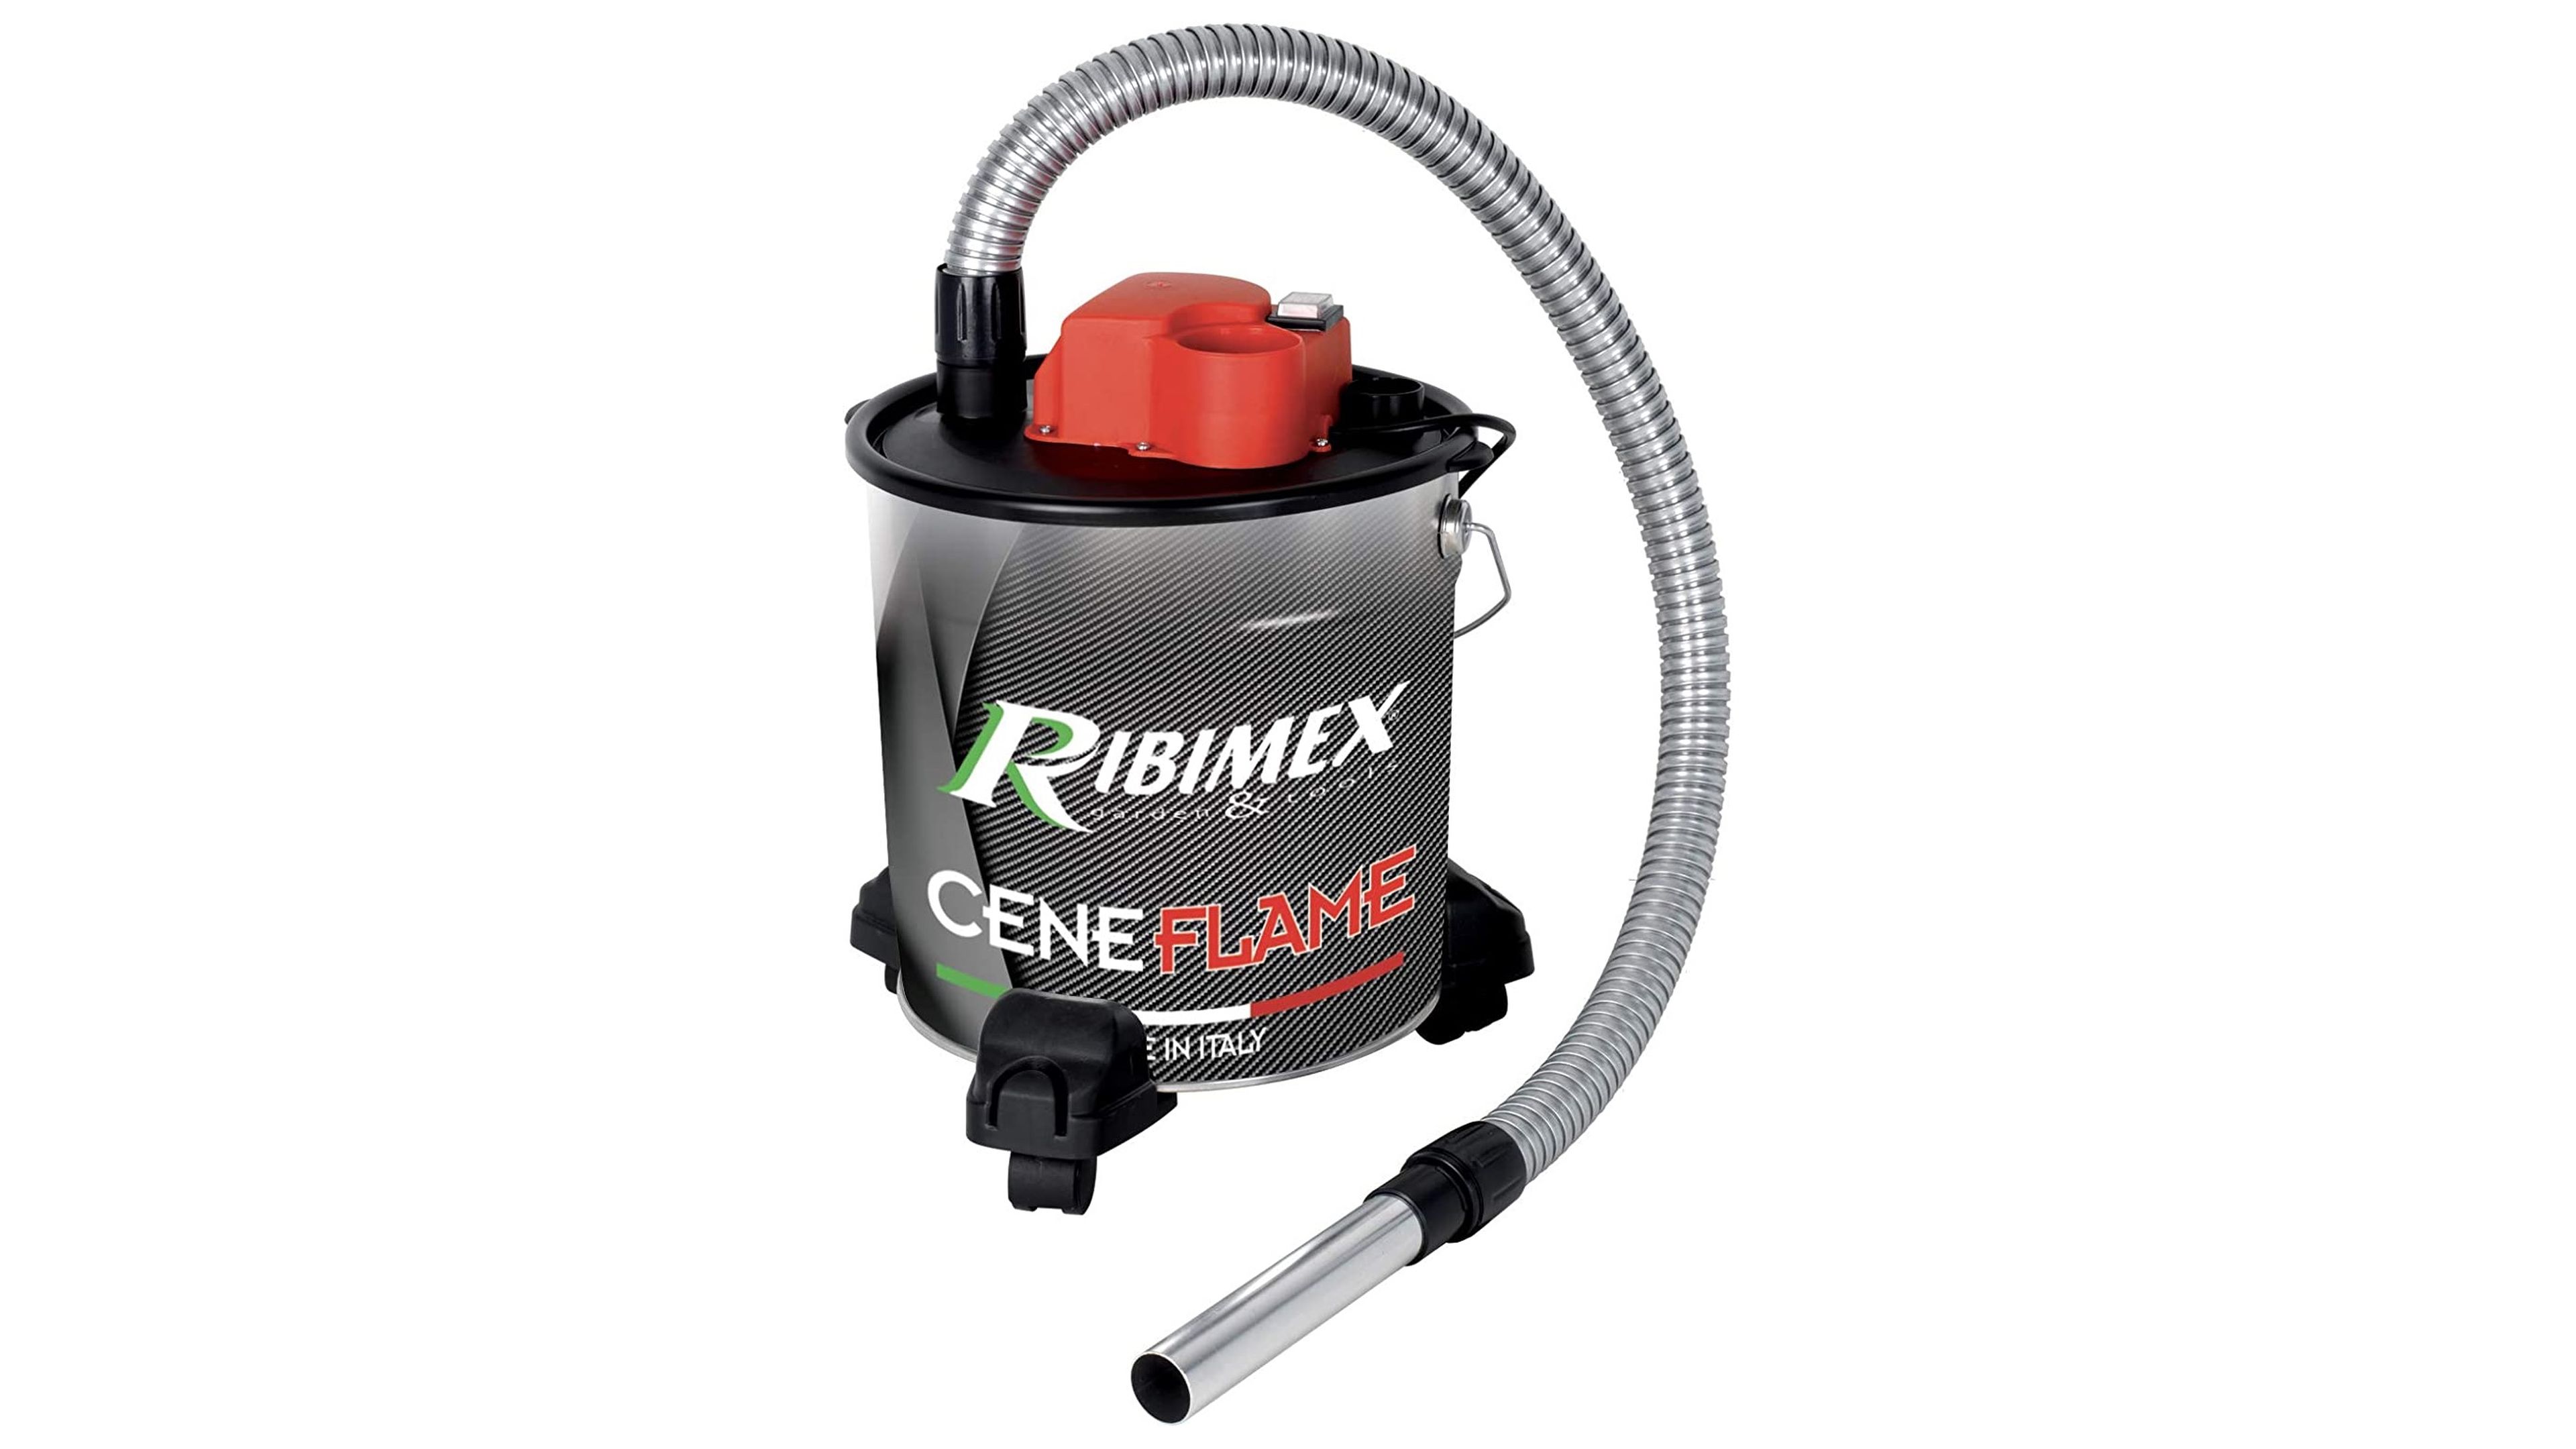 Ribimex cenerall - Aspirador cenizas para estufa pellets 